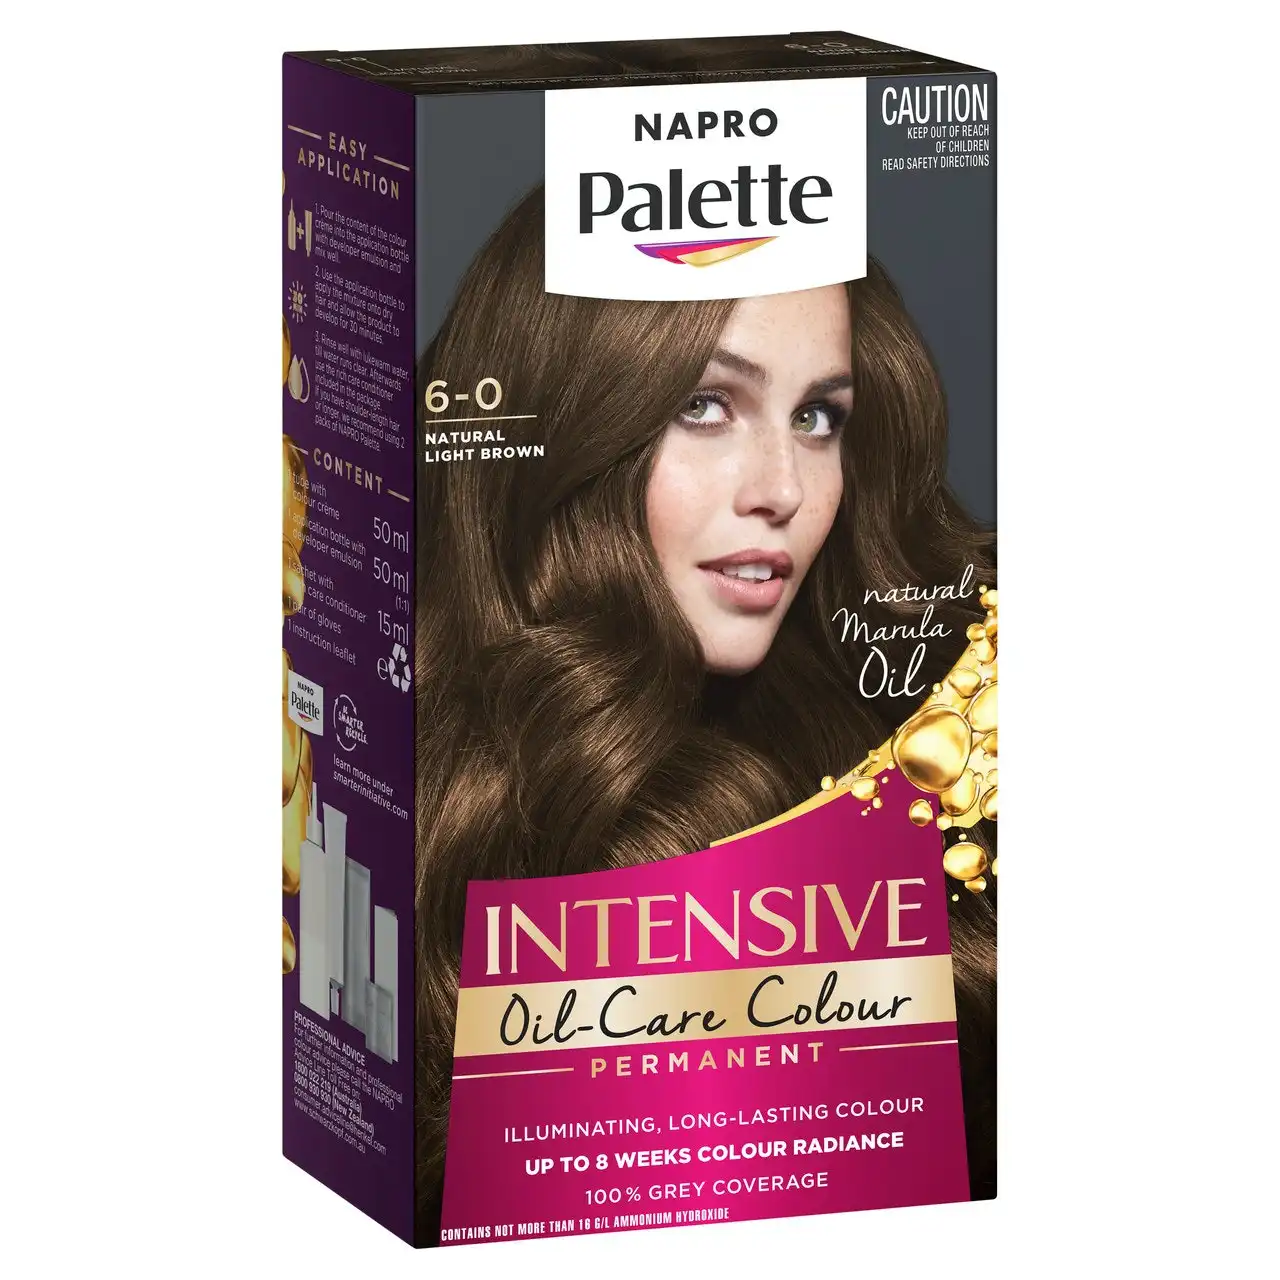 Napro Palette Intensive Creme Colour Permanent 6-0 Natural Light Brown